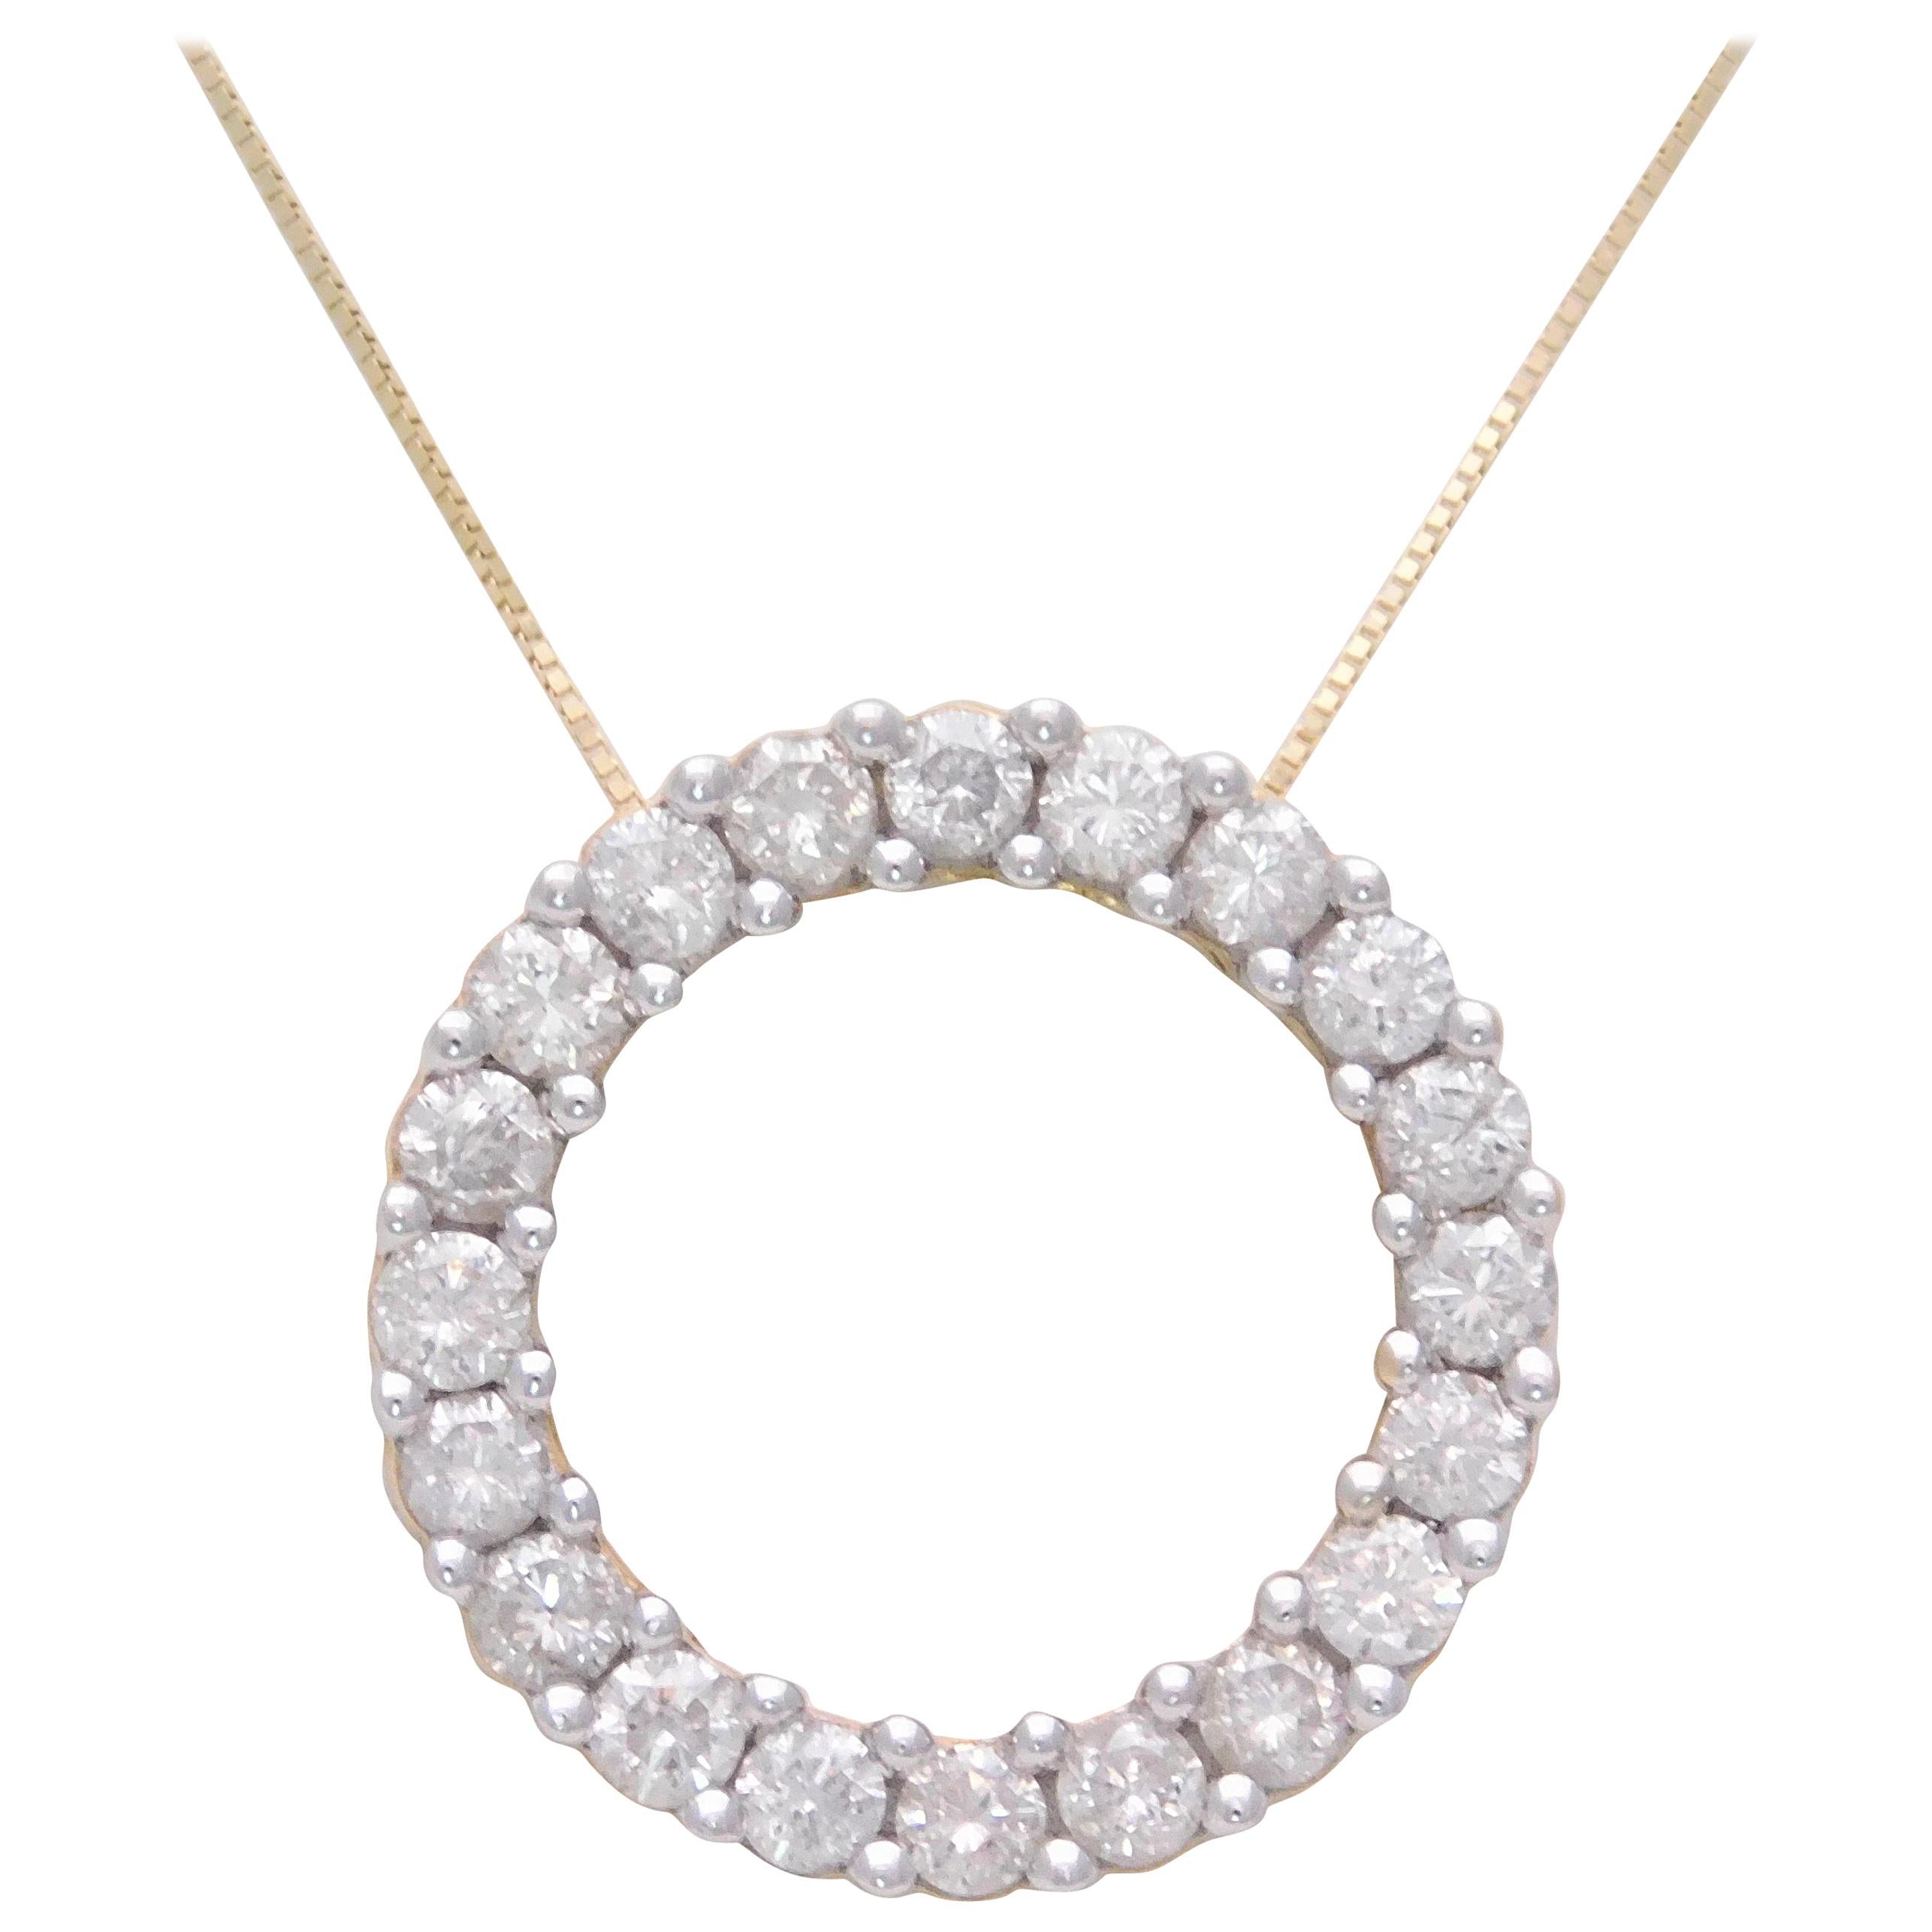 Vintage 2 Carat Diamond “Circle of Love” Pendant Necklace